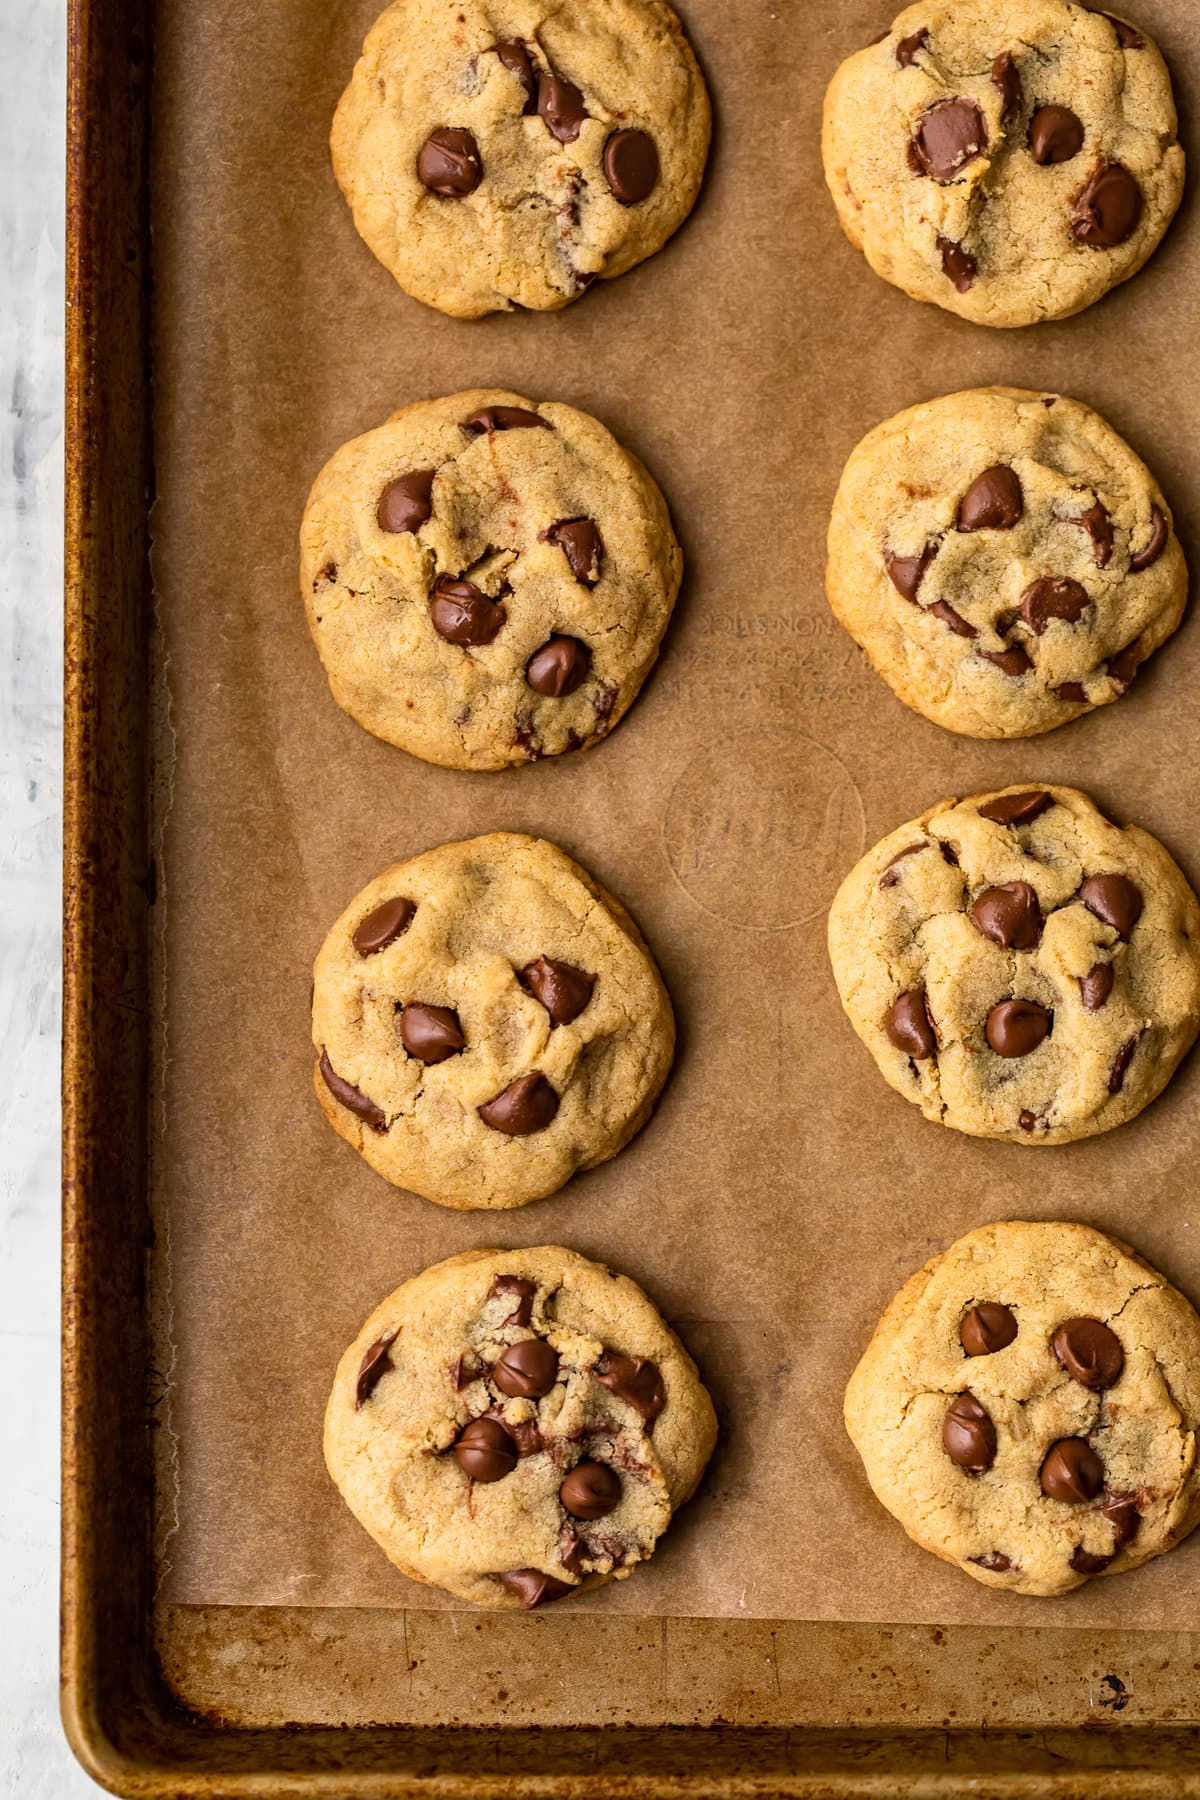 https://www.thecookierookie.com/wp-content/uploads/2019/02/gluten-free-chocolate-chip-cookies-recipe-1-of-9.jpg